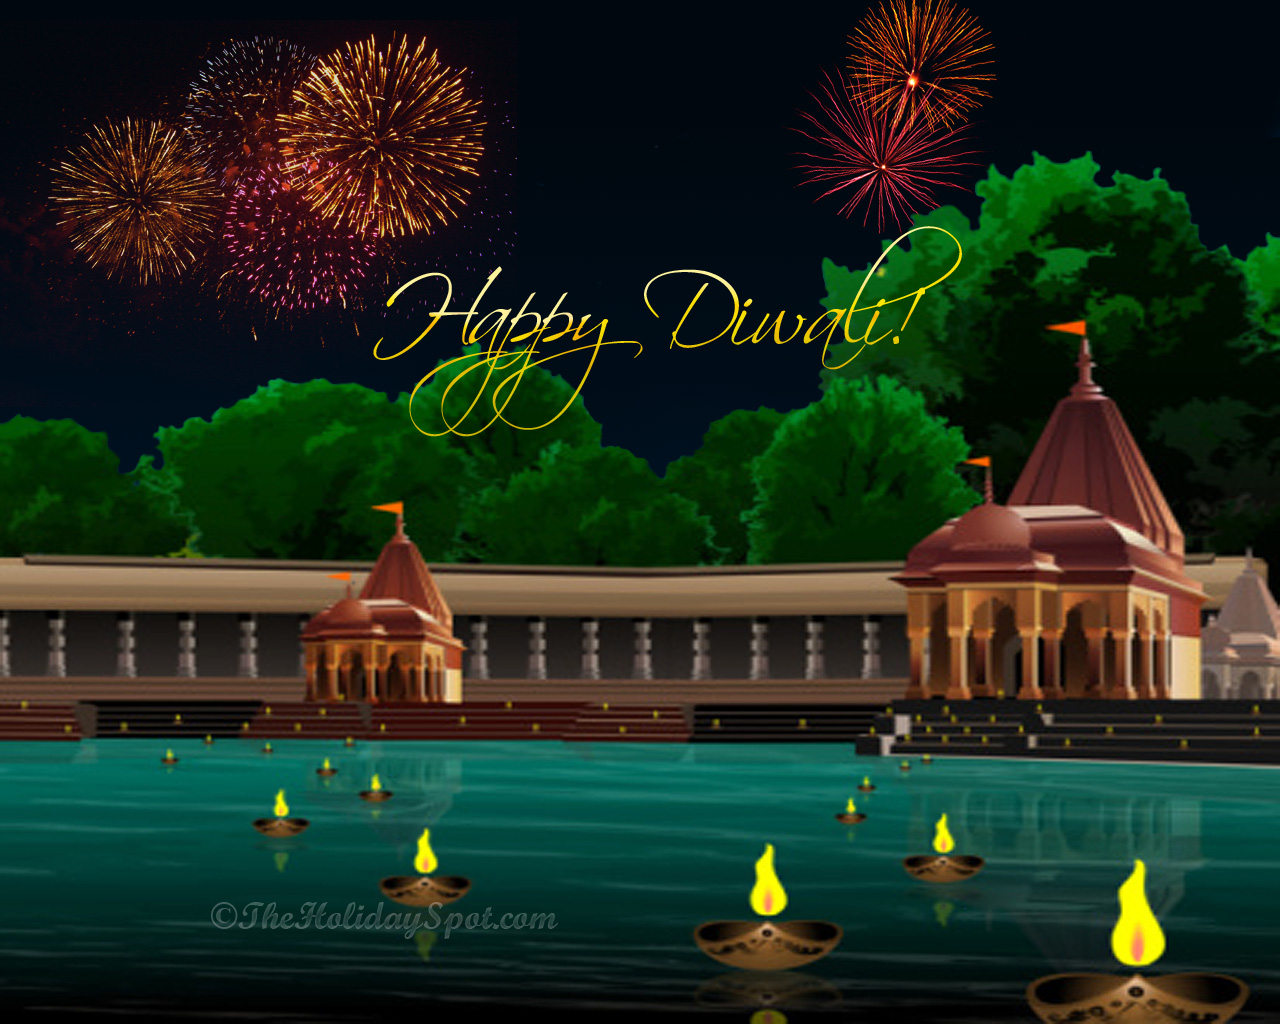 Happy Diwali Image Download Hd - 1280x1024 Wallpaper 